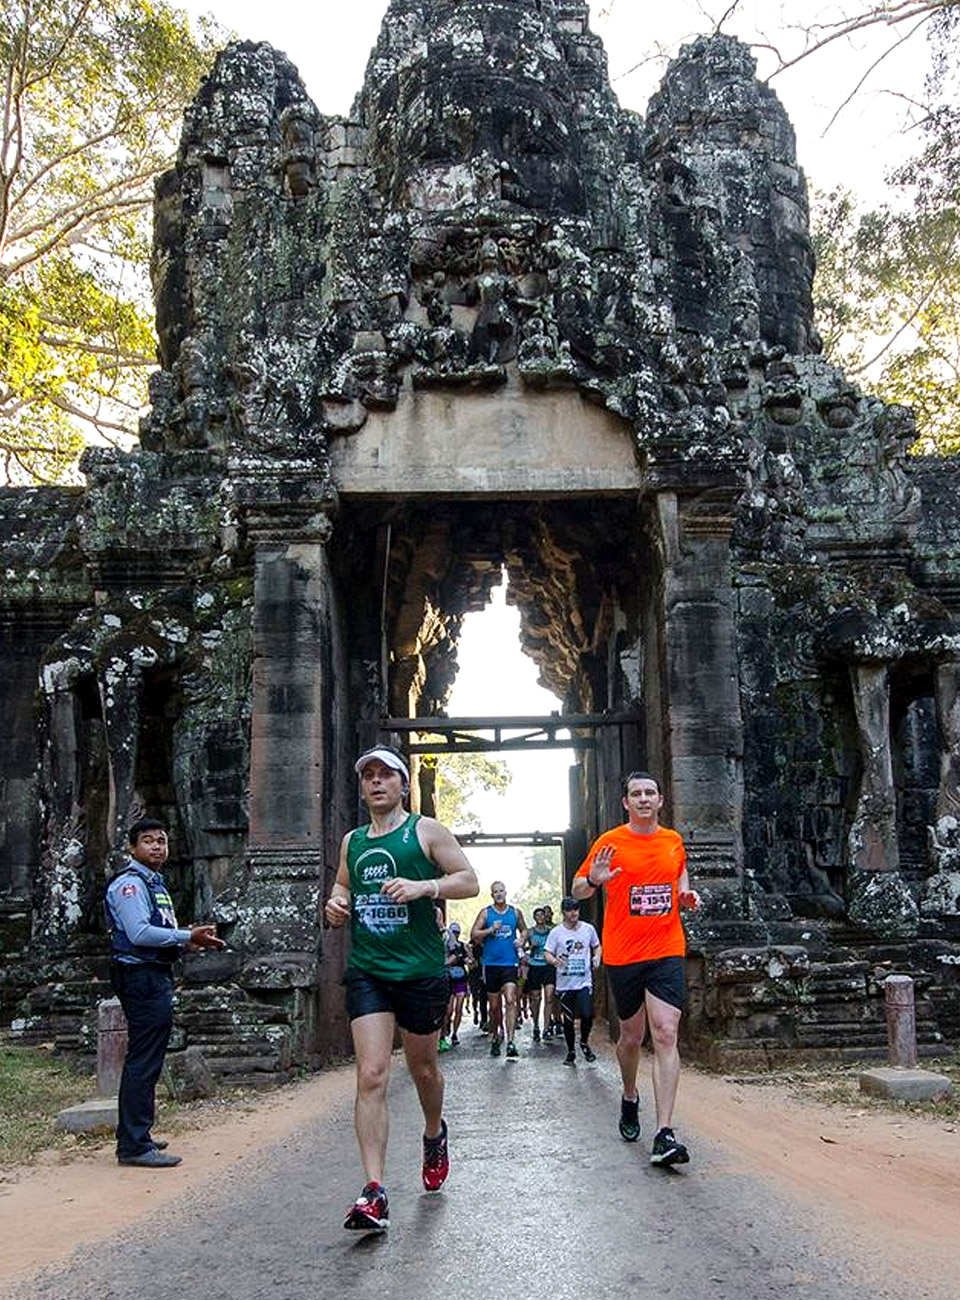 Angkor Wat International Half Marathon 2017: Return and Run Back with History